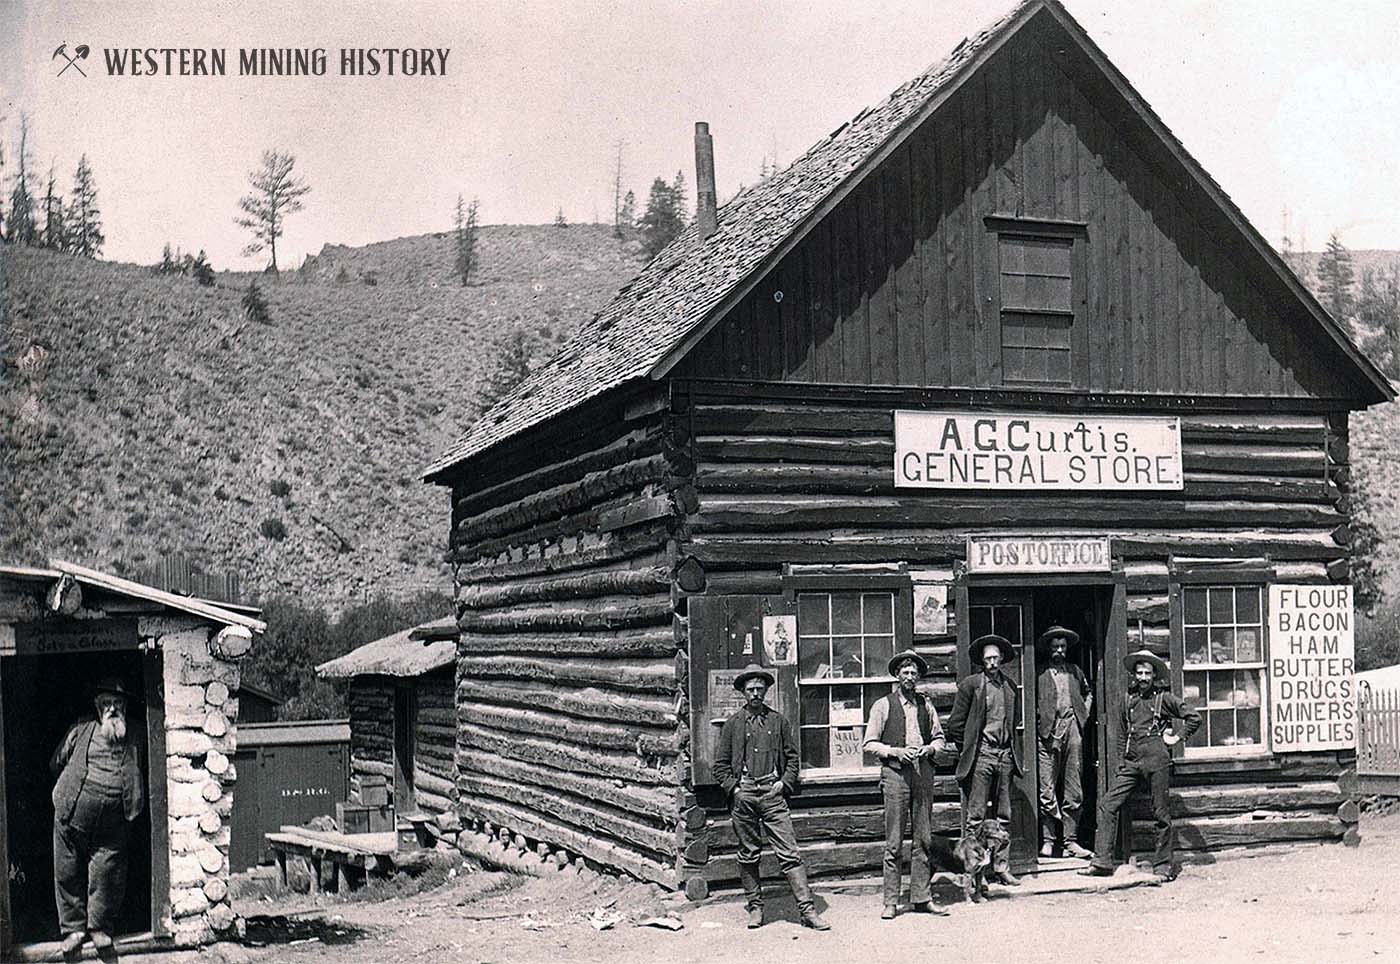 Featured Mining Town: Granite, Colorado